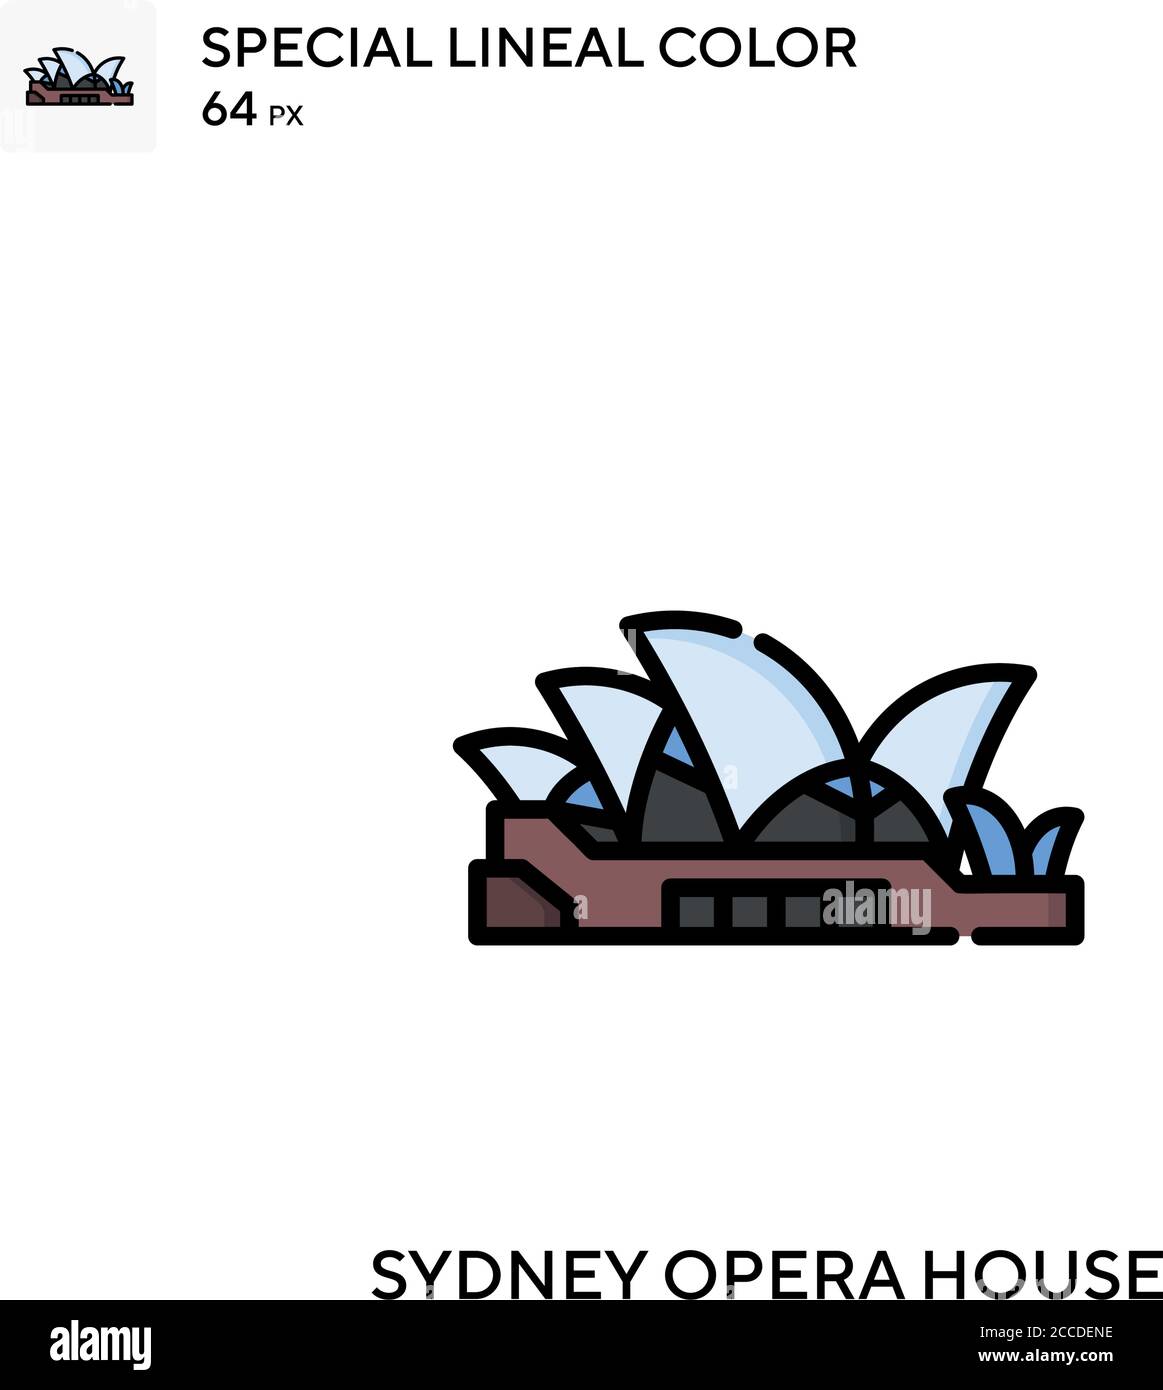 Sydney Opera House Besondere lineare Farbe Symbol. Illustration Symbol Design Vorlage für Web mobile UI-Element. Perfekte Farbe modernes Piktogramm auf editabl Stock Vektor